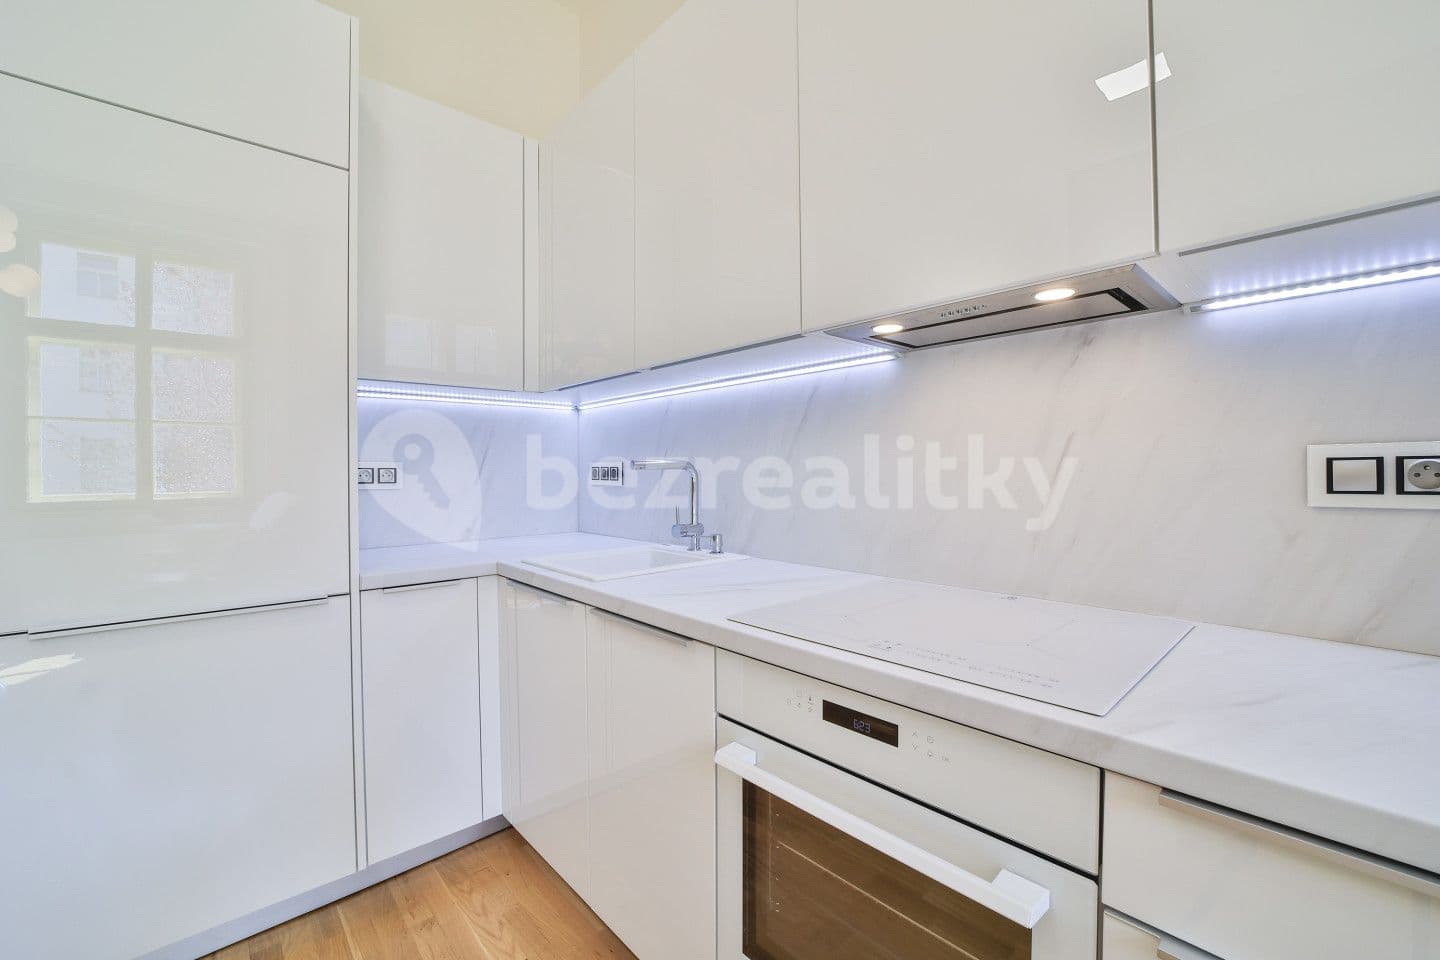 1 bedroom with open-plan kitchen flat for sale, 43 m², Legerova, Prague, Prague